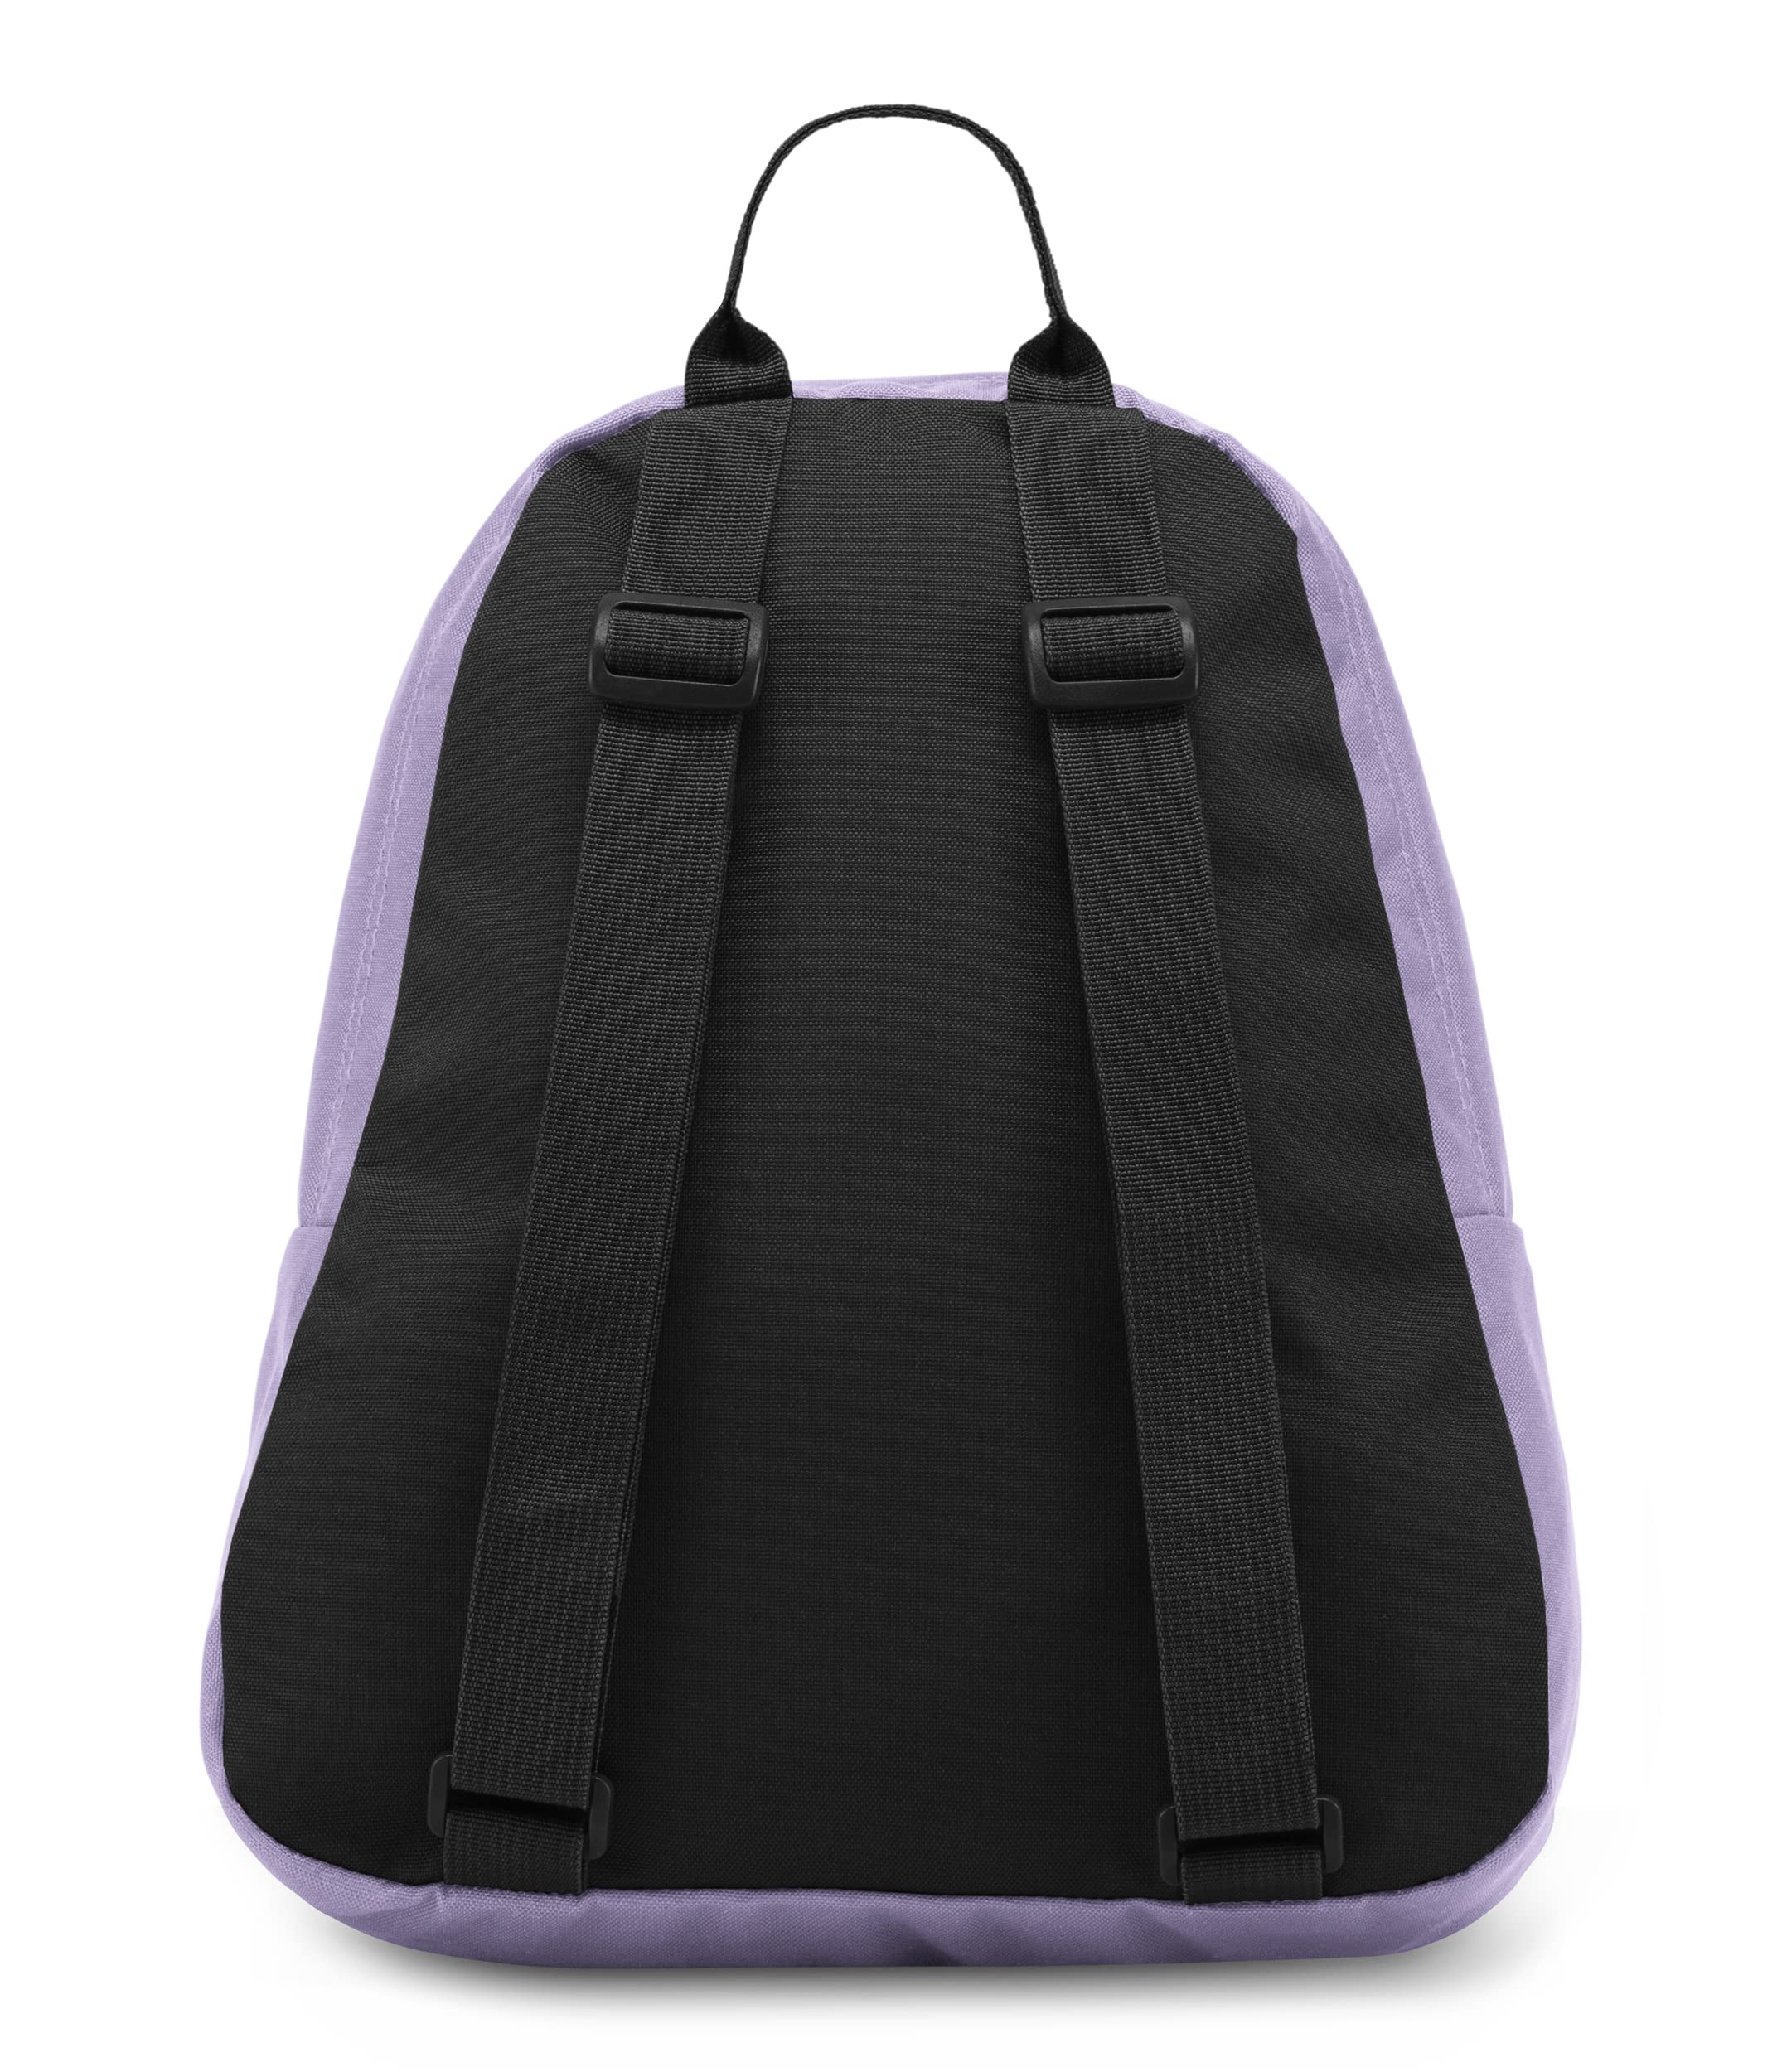 JanSport Half Pint Mini Backpack - Ideal Day Bag for Travel, Pastel Lilac